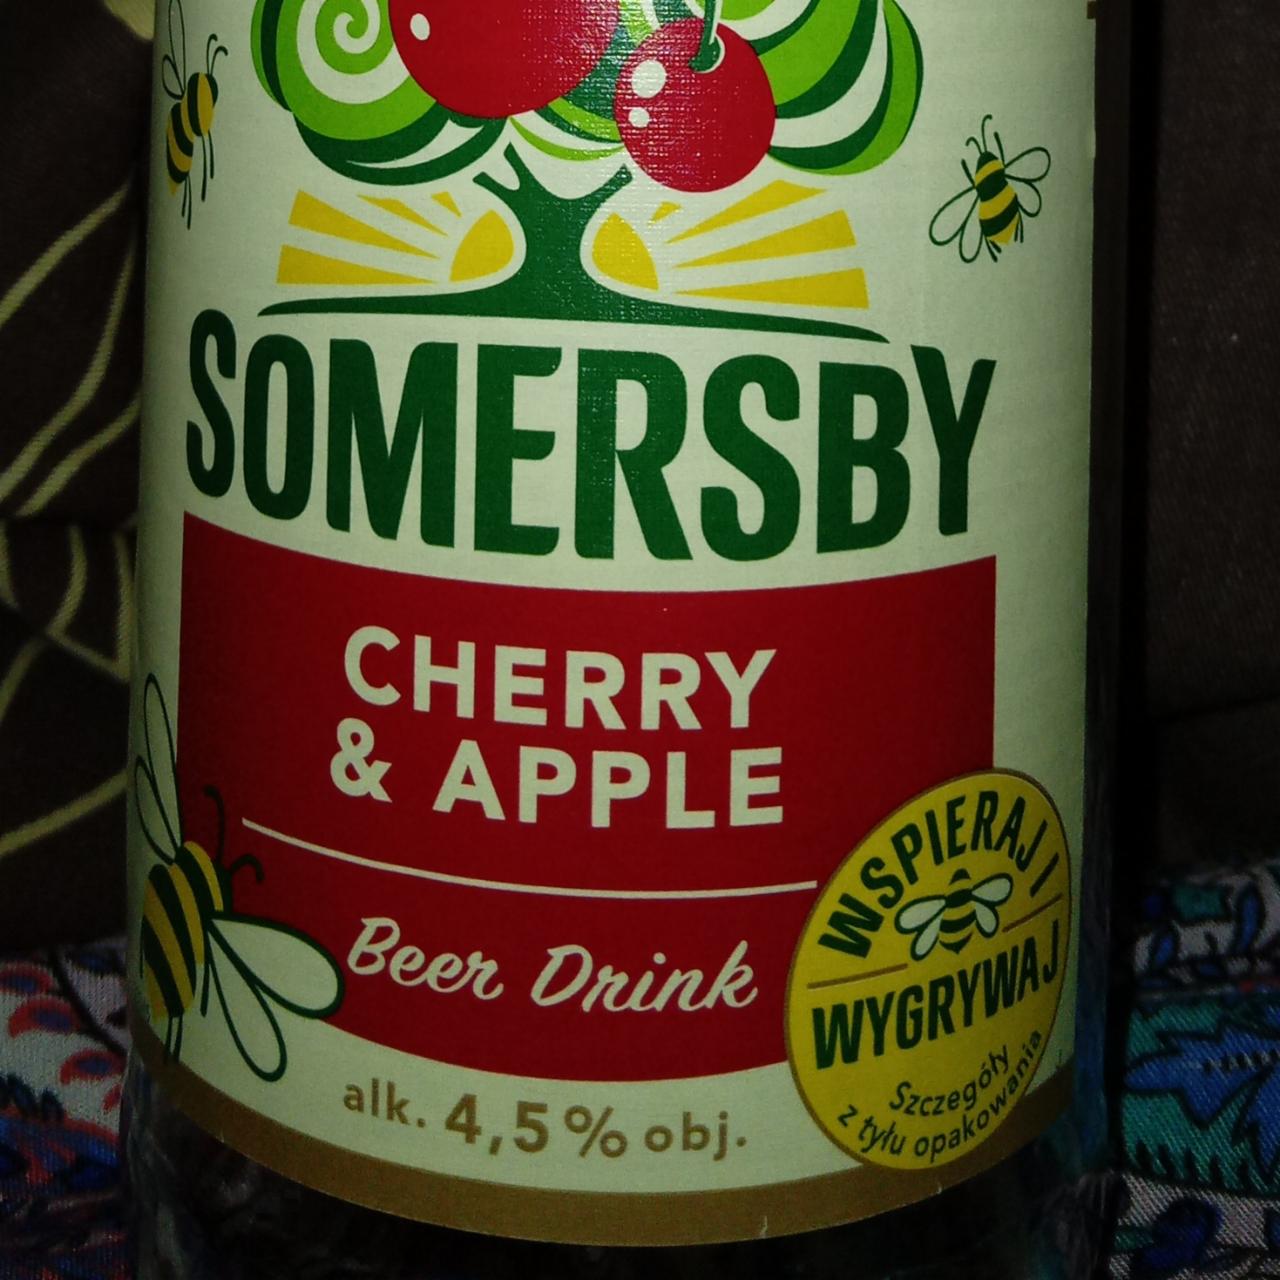 Fotografie - Cherry & apple beer drink alk. 4,5% obj. Somersby